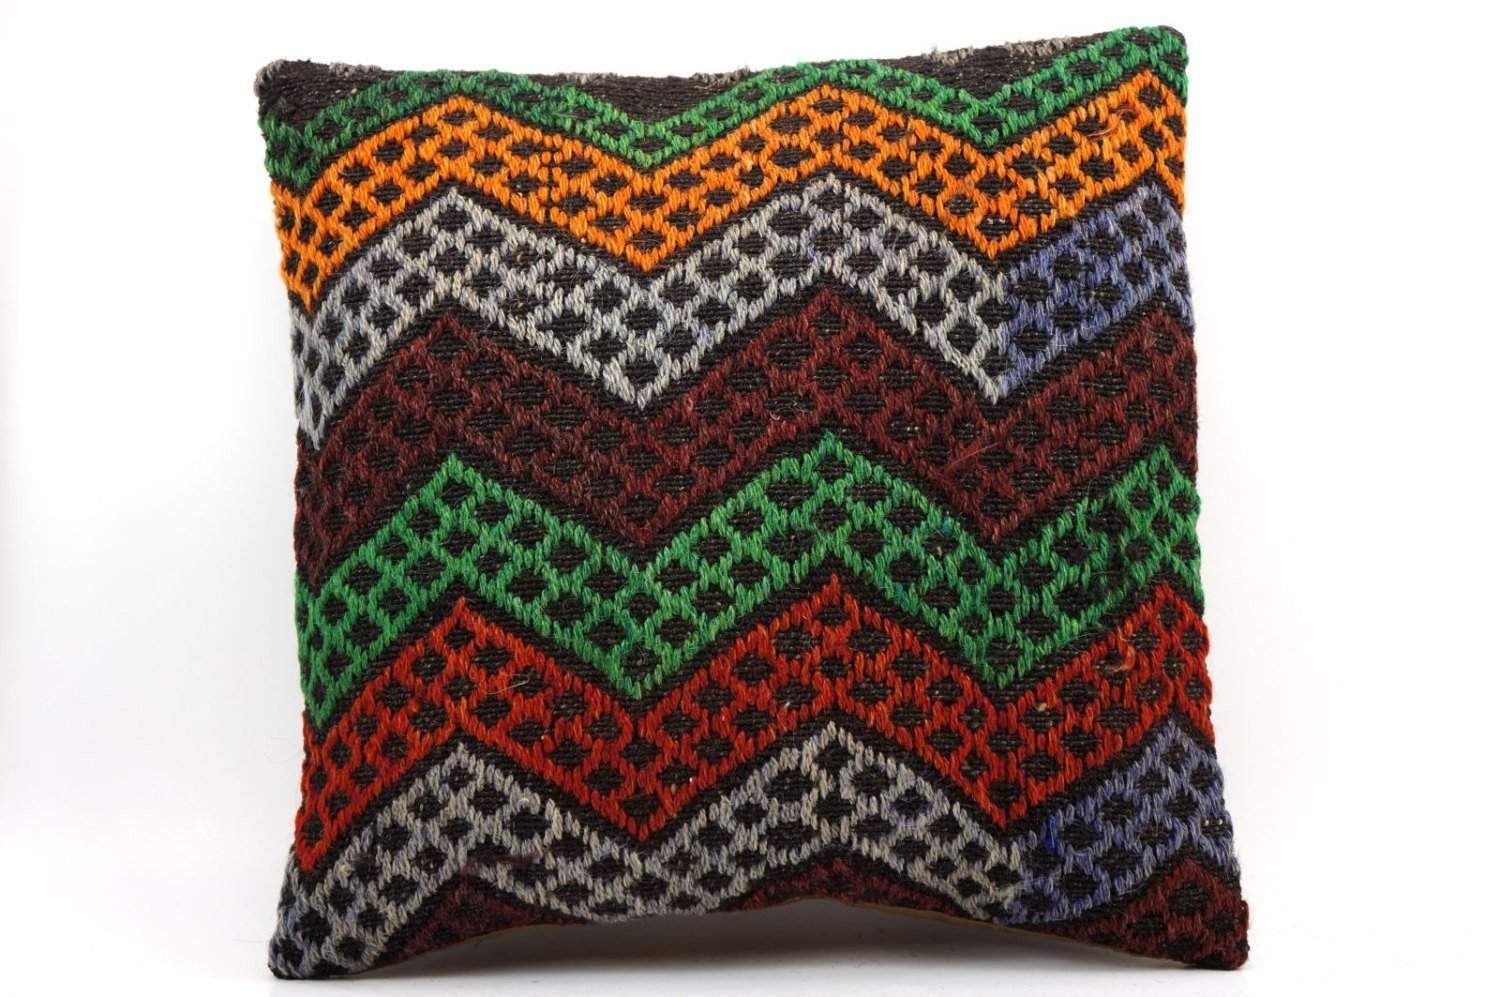 16x16 Vintage Hand Woven Kilim Pillow 496,orange,green,blue,black,red,claret red,chevron